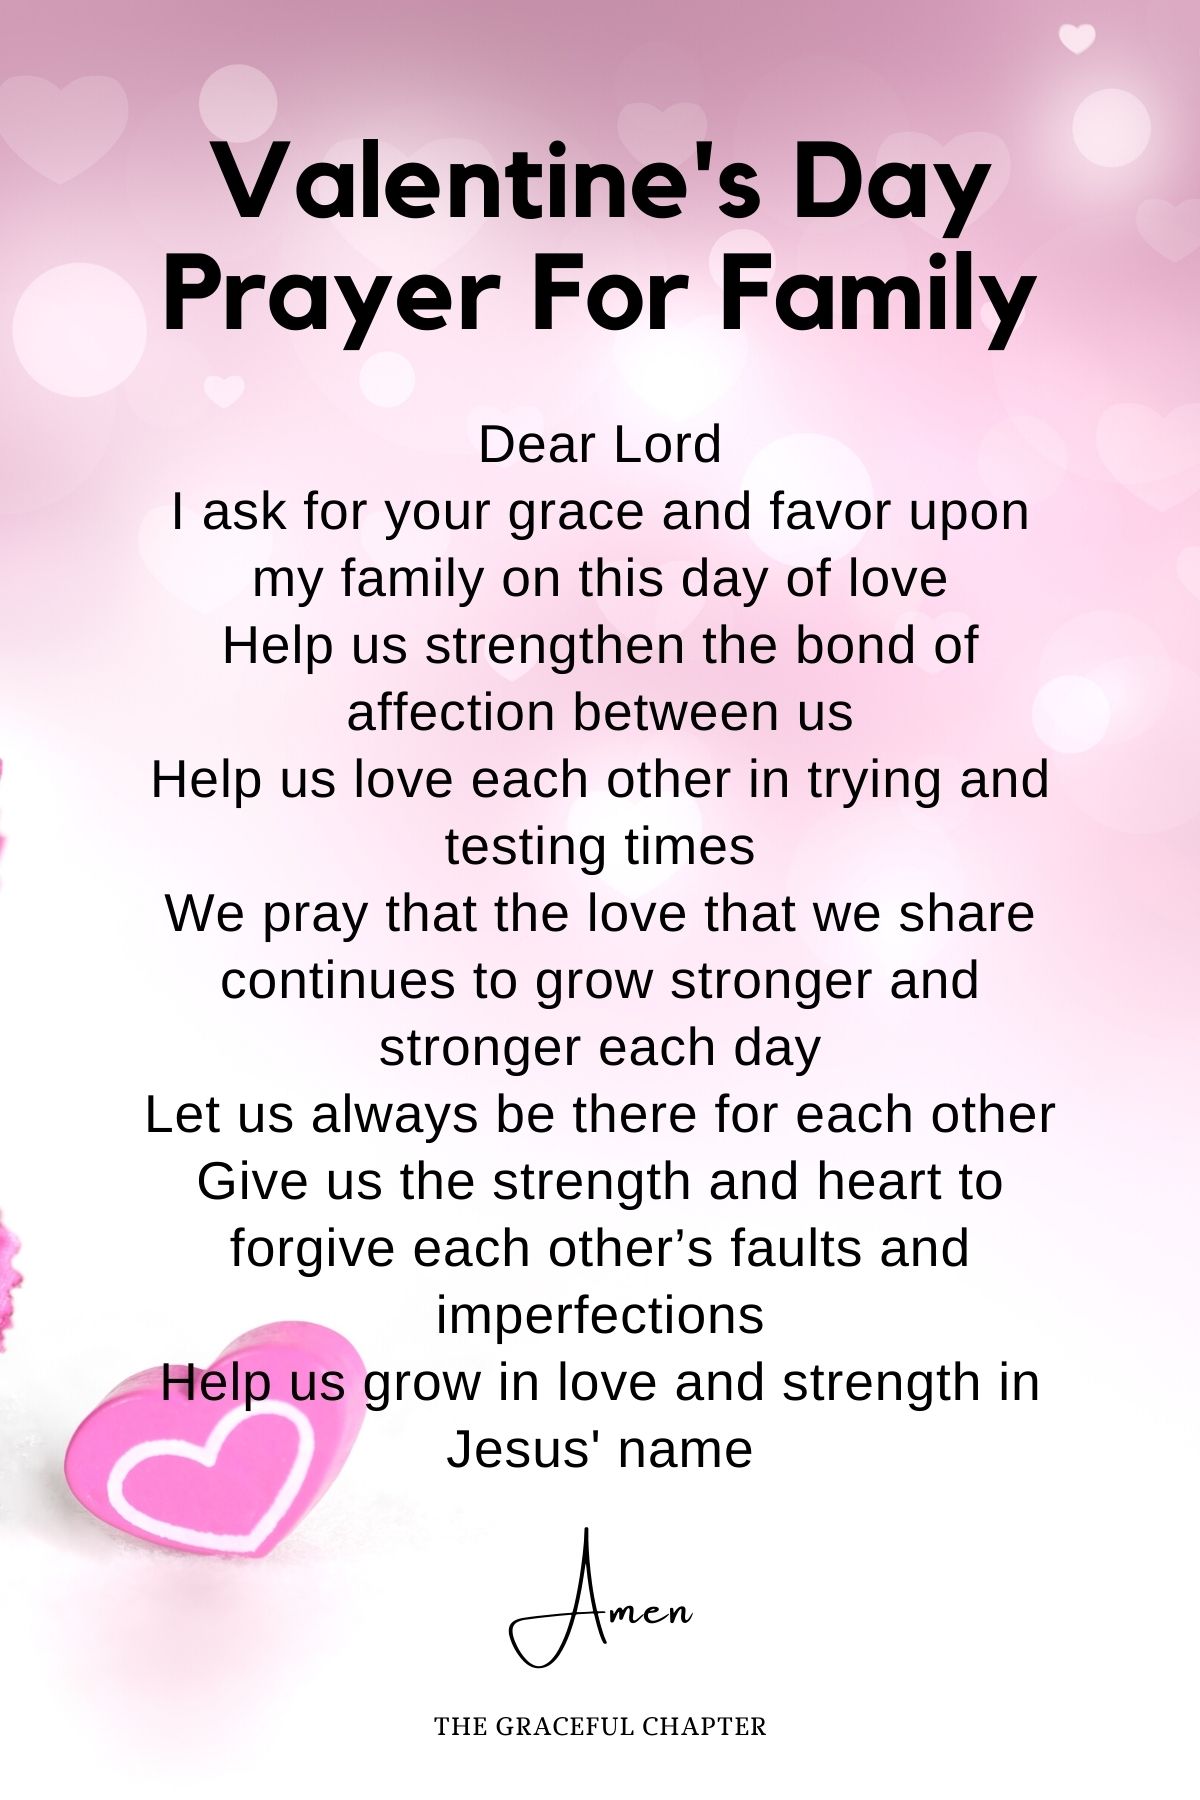 Valentine's day prayer for family